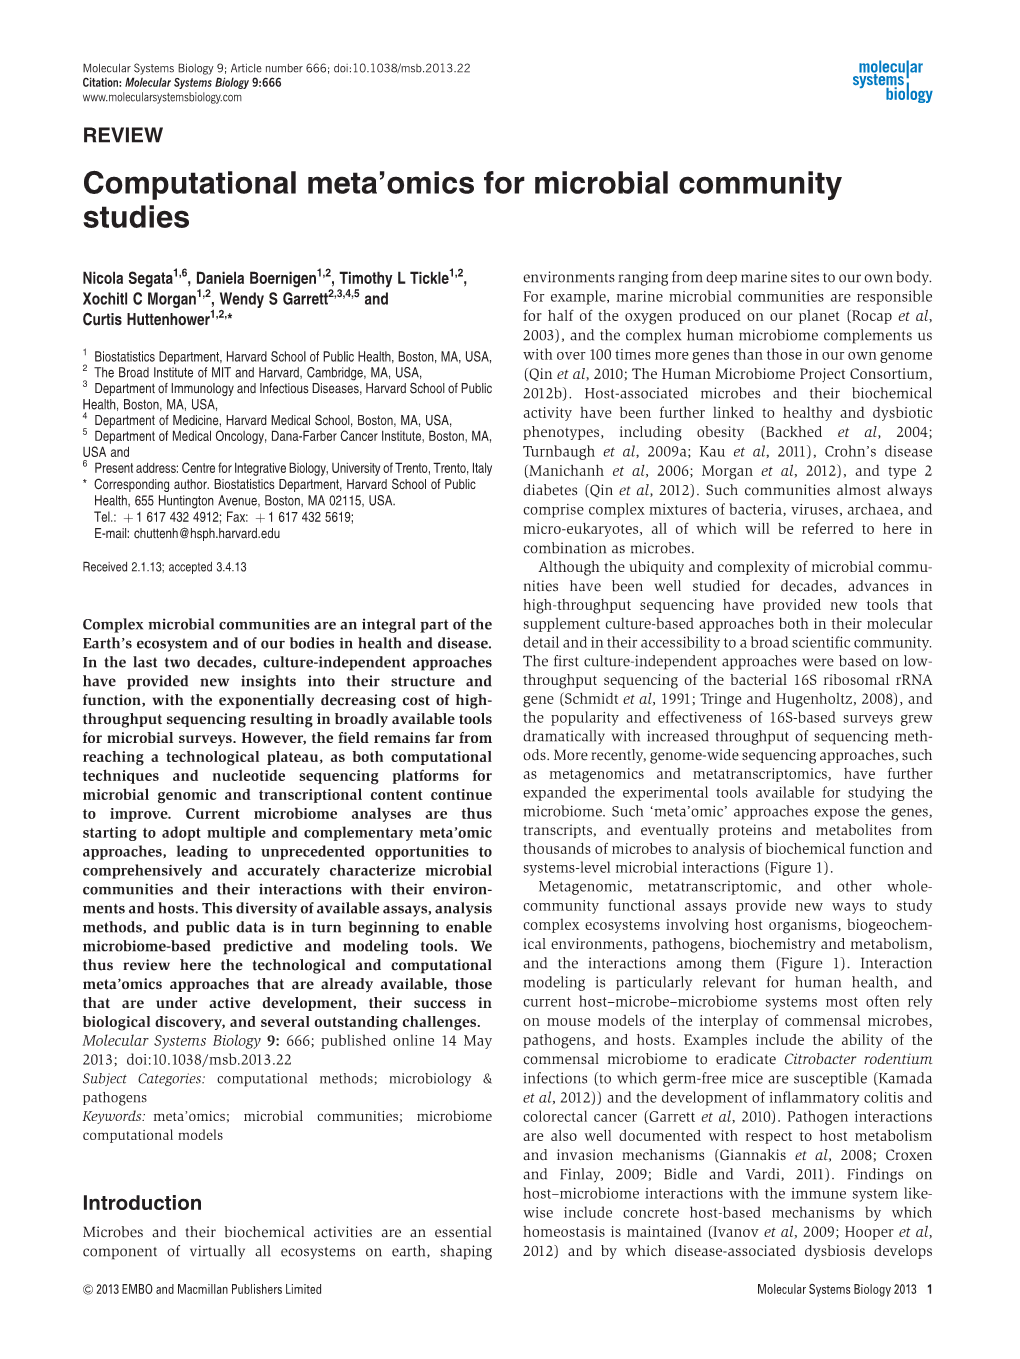 Computational Meta'omics for Microbial Community Studies